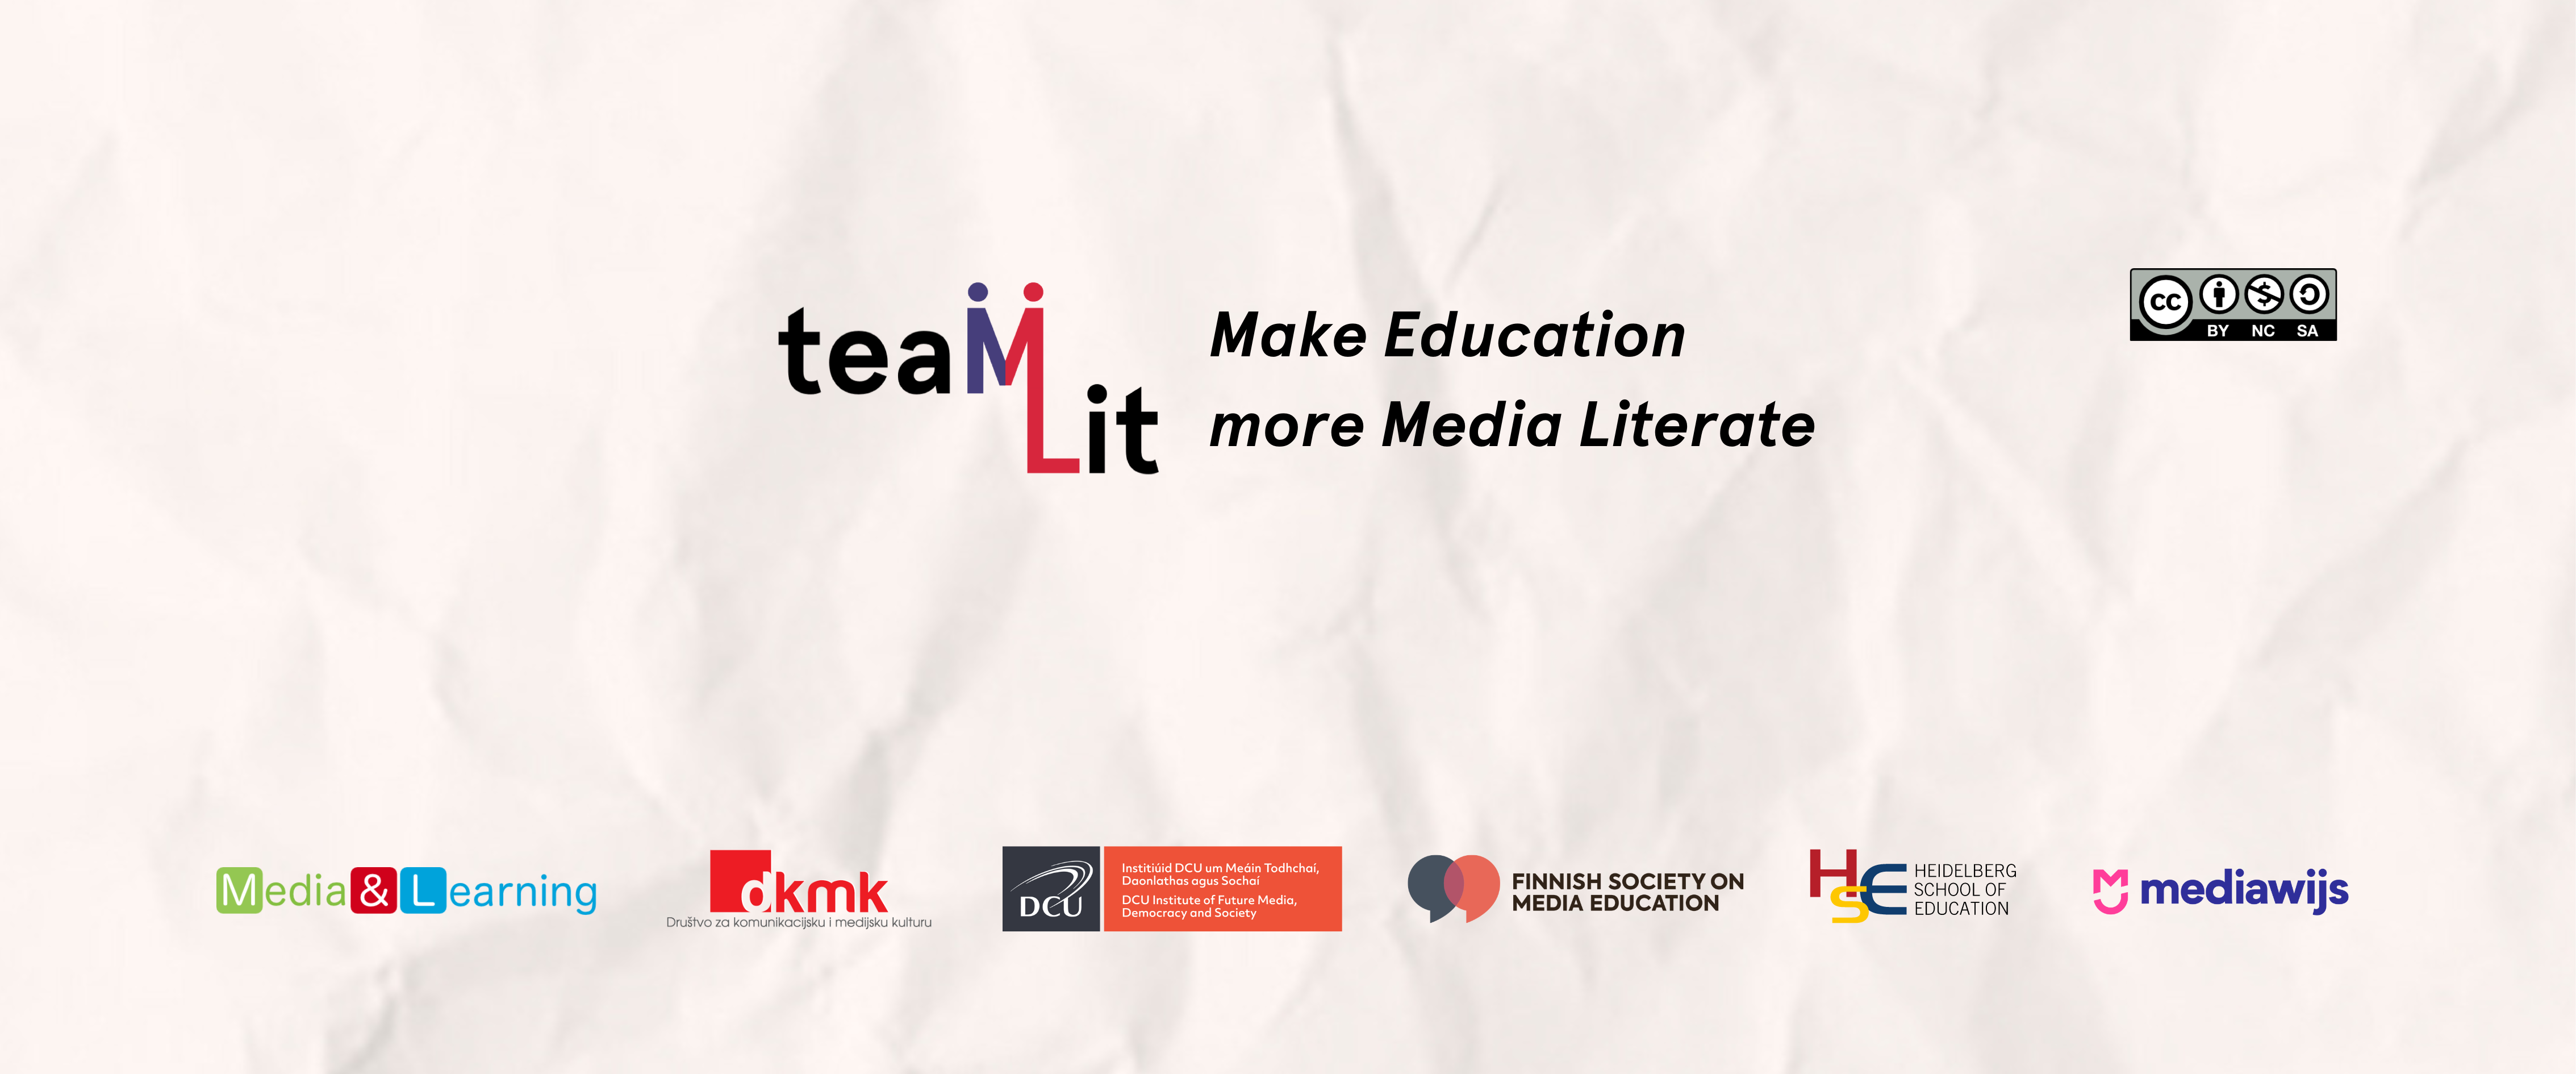 TeaMLit - making education more media literate